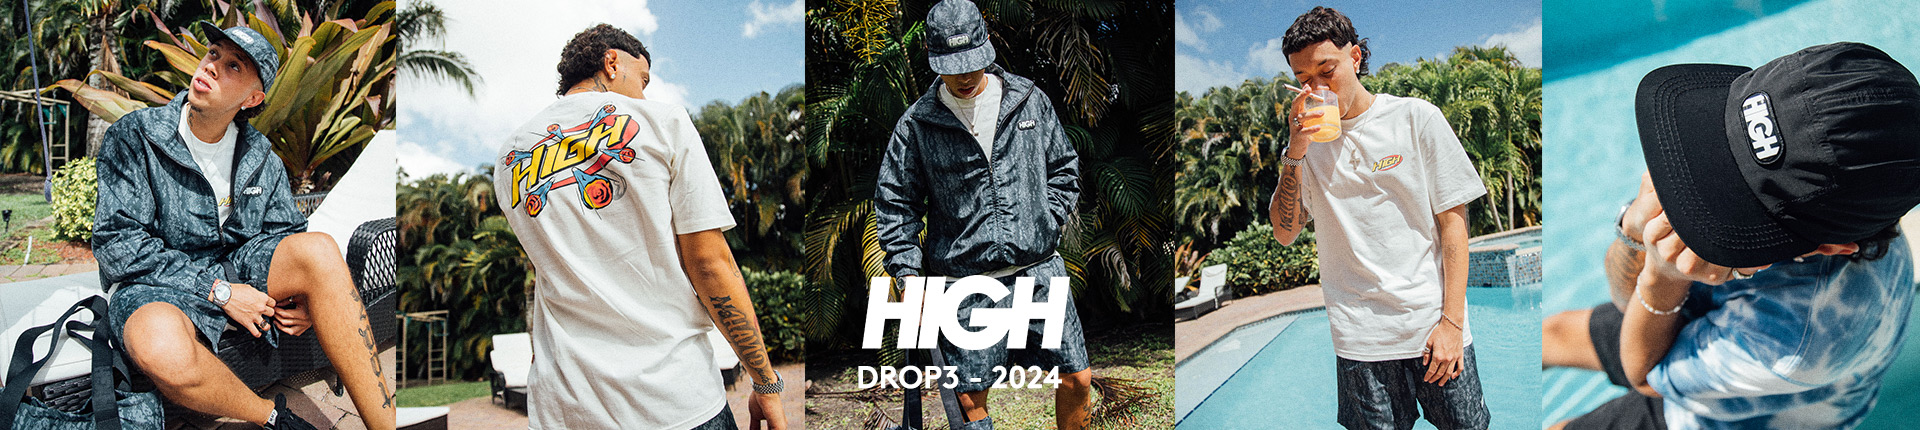 High Drop6